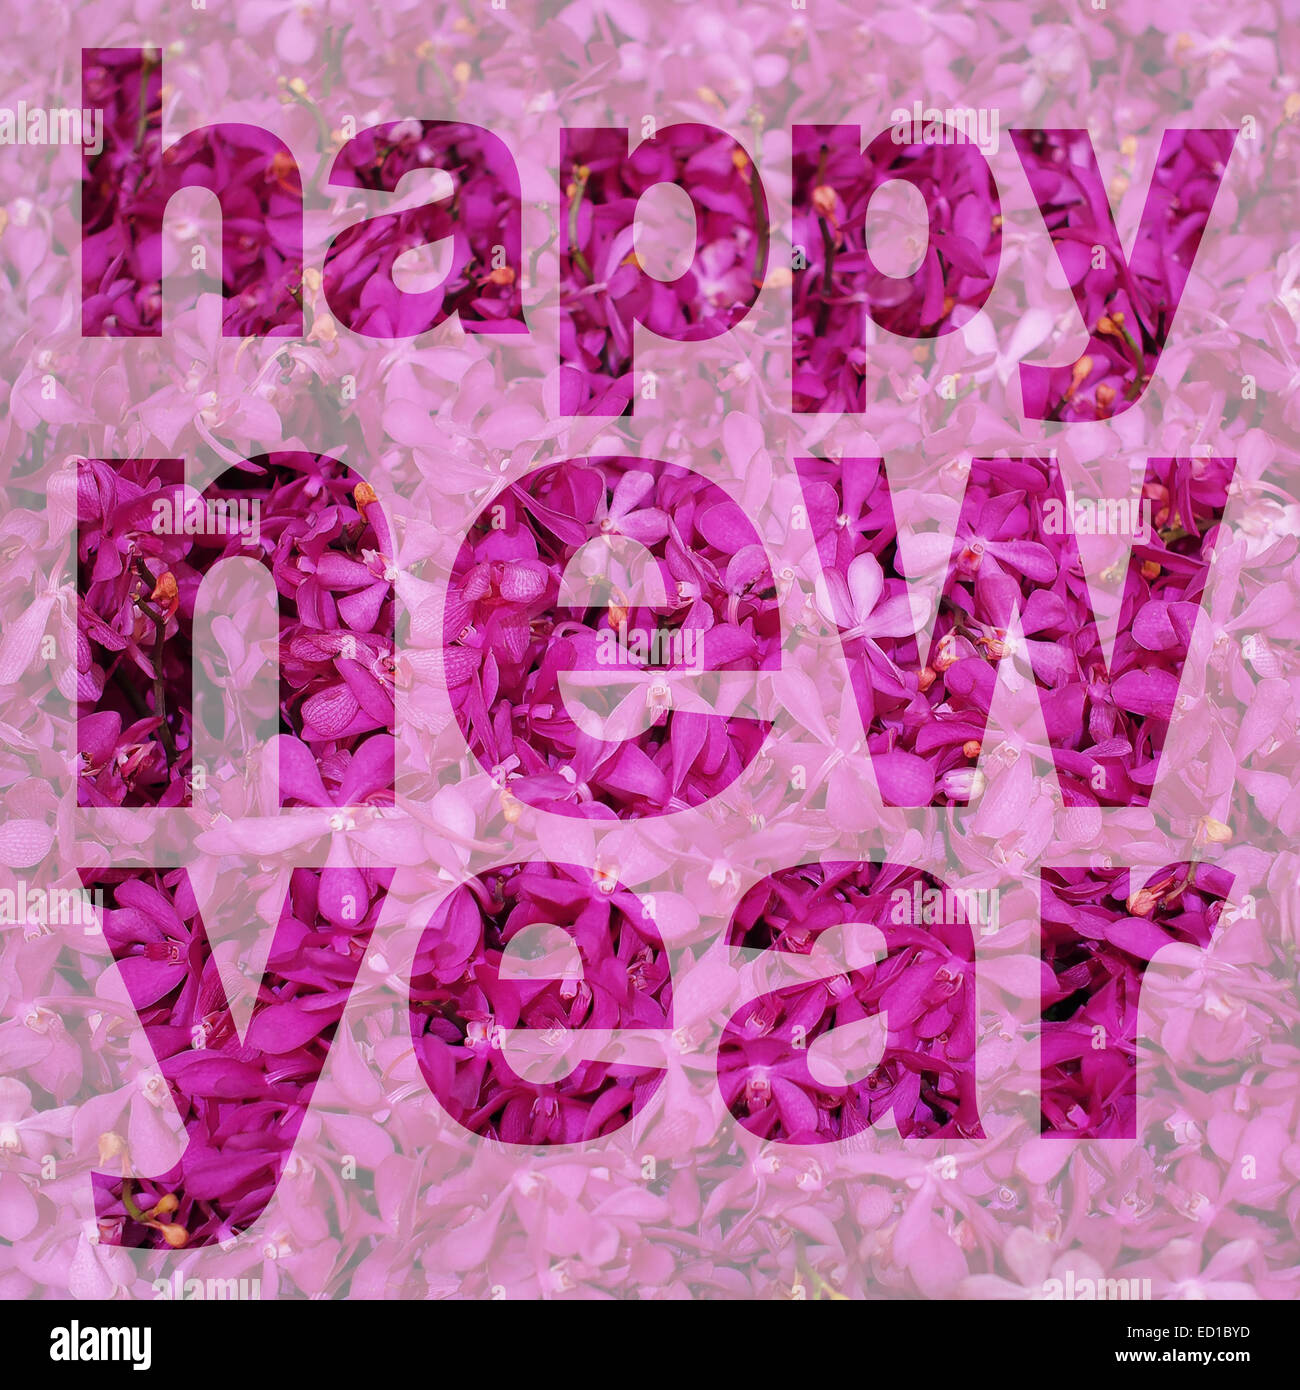 Frohes neues Jahr aus Orchidee Blumenbild gewordene Wort Stockfoto